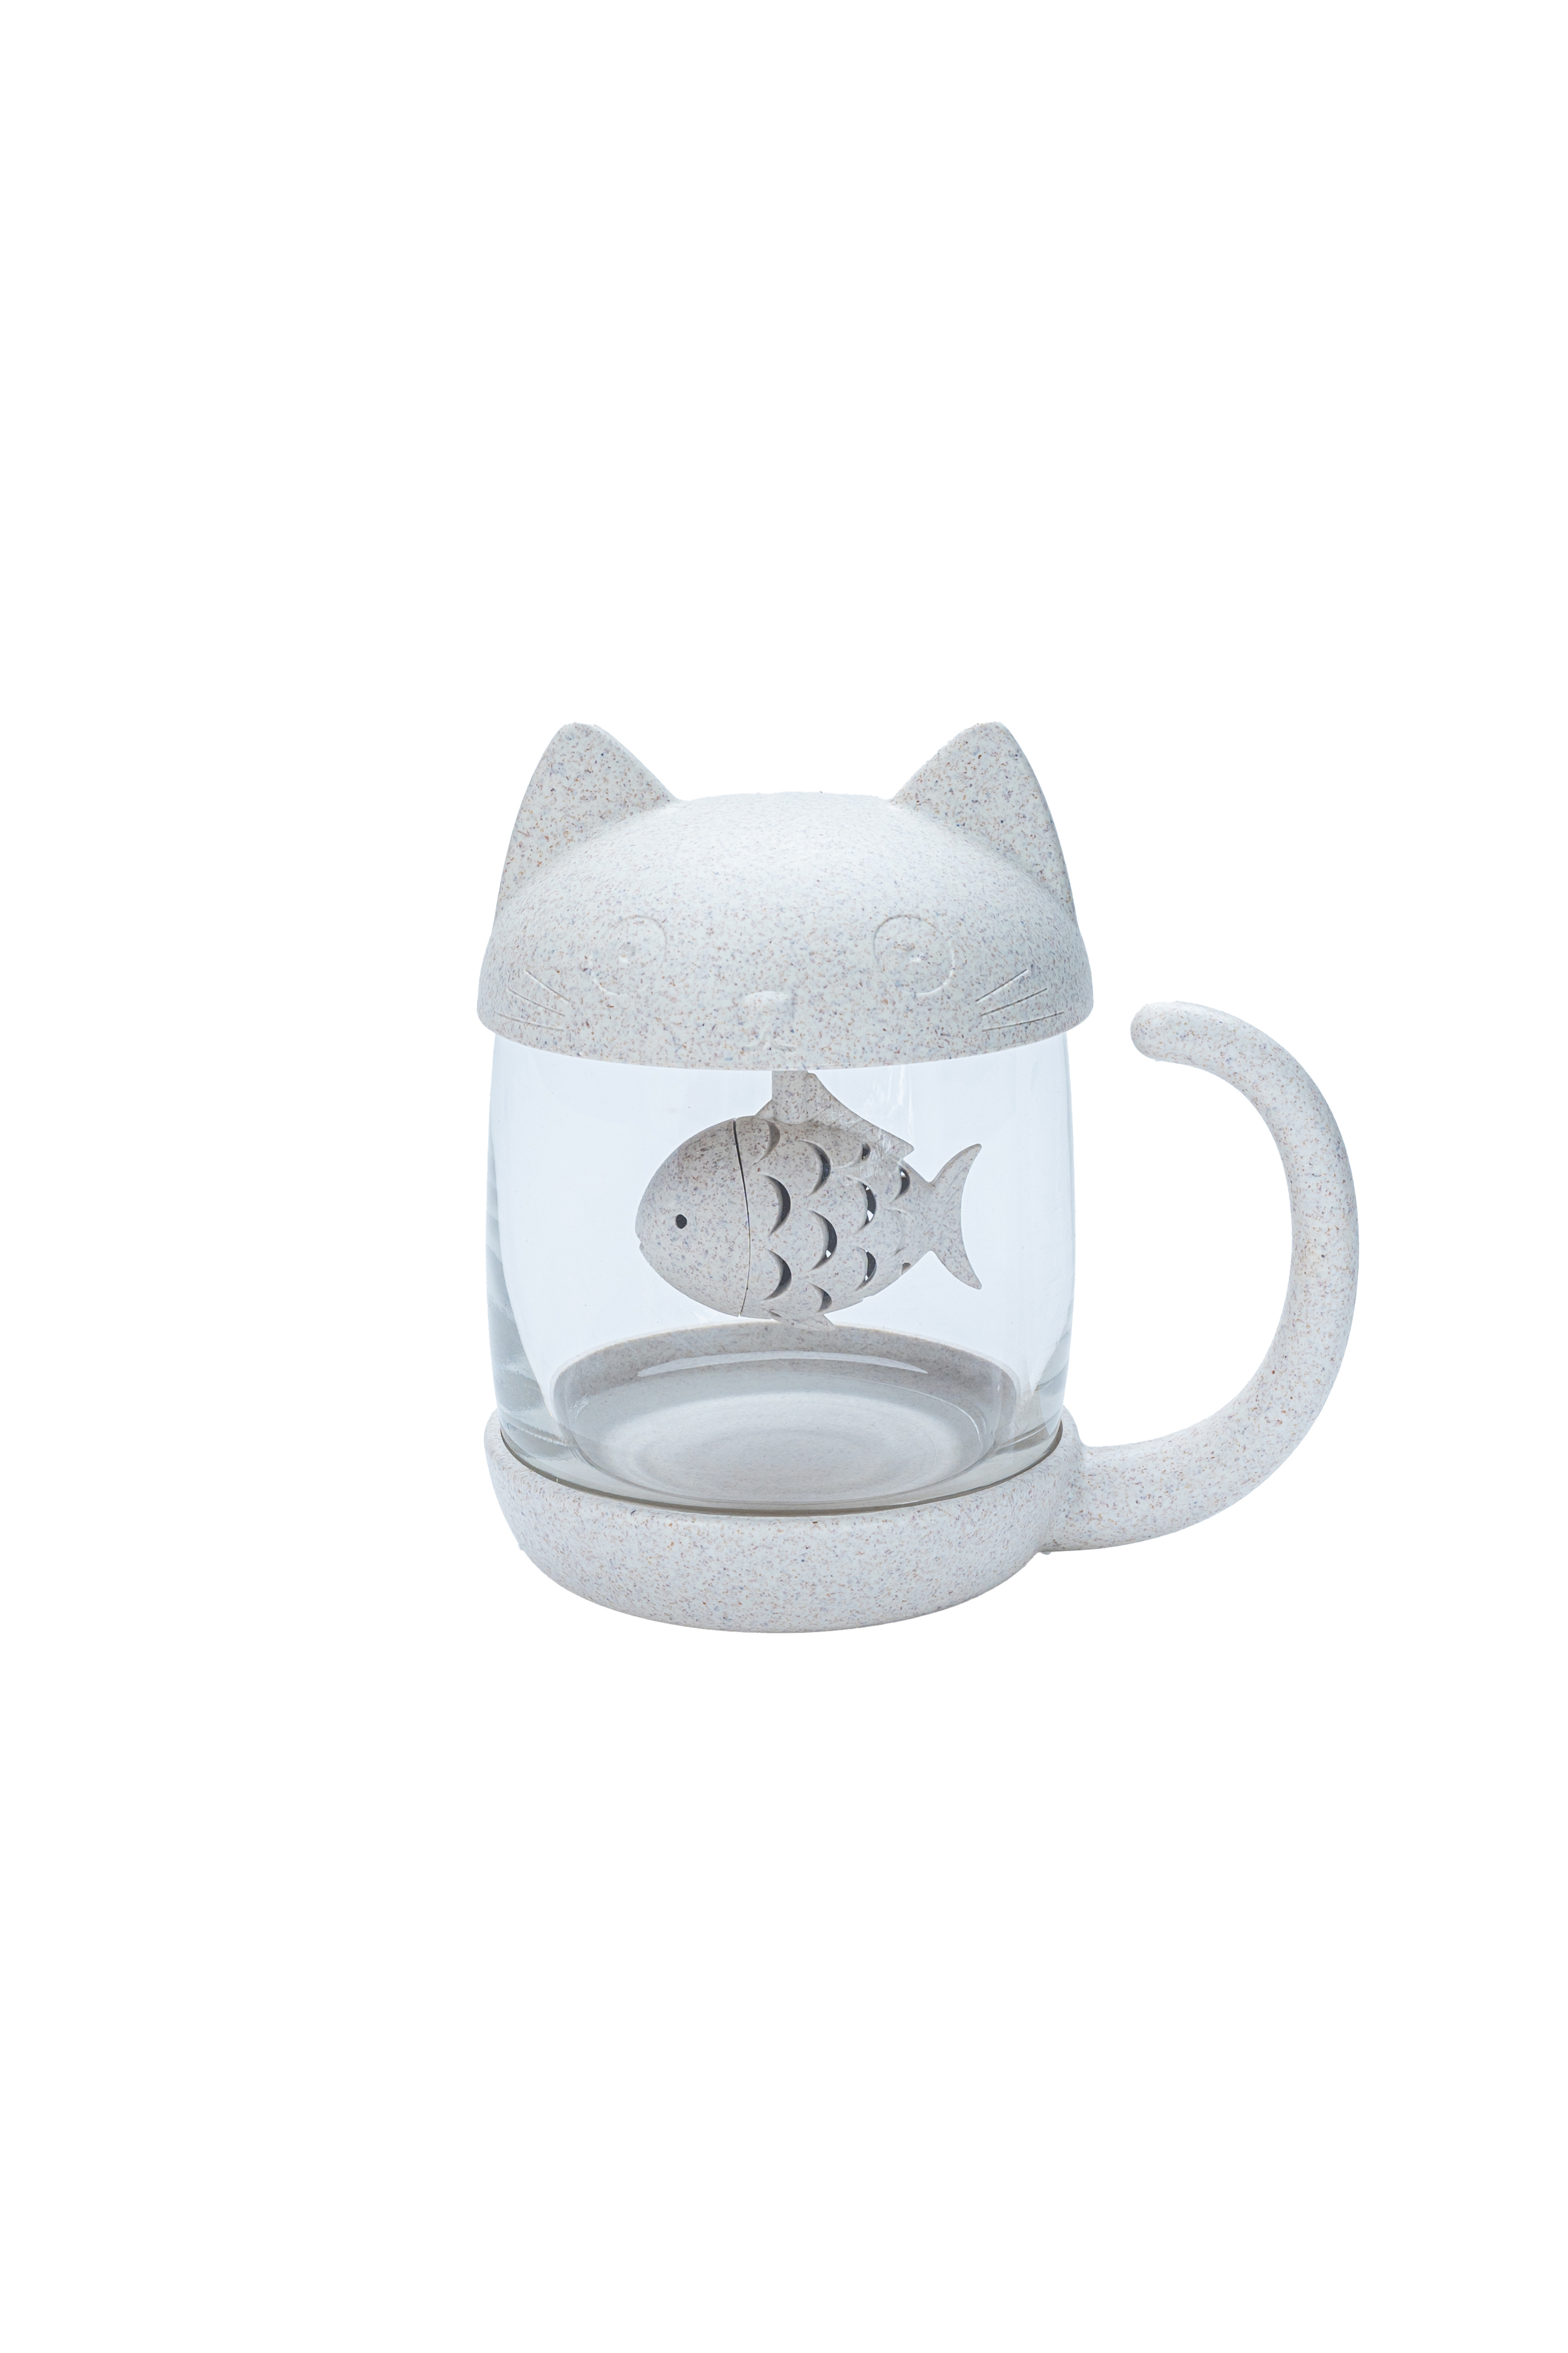 Cat Glass Tea Mug with Fish Tea Infuser Strainer